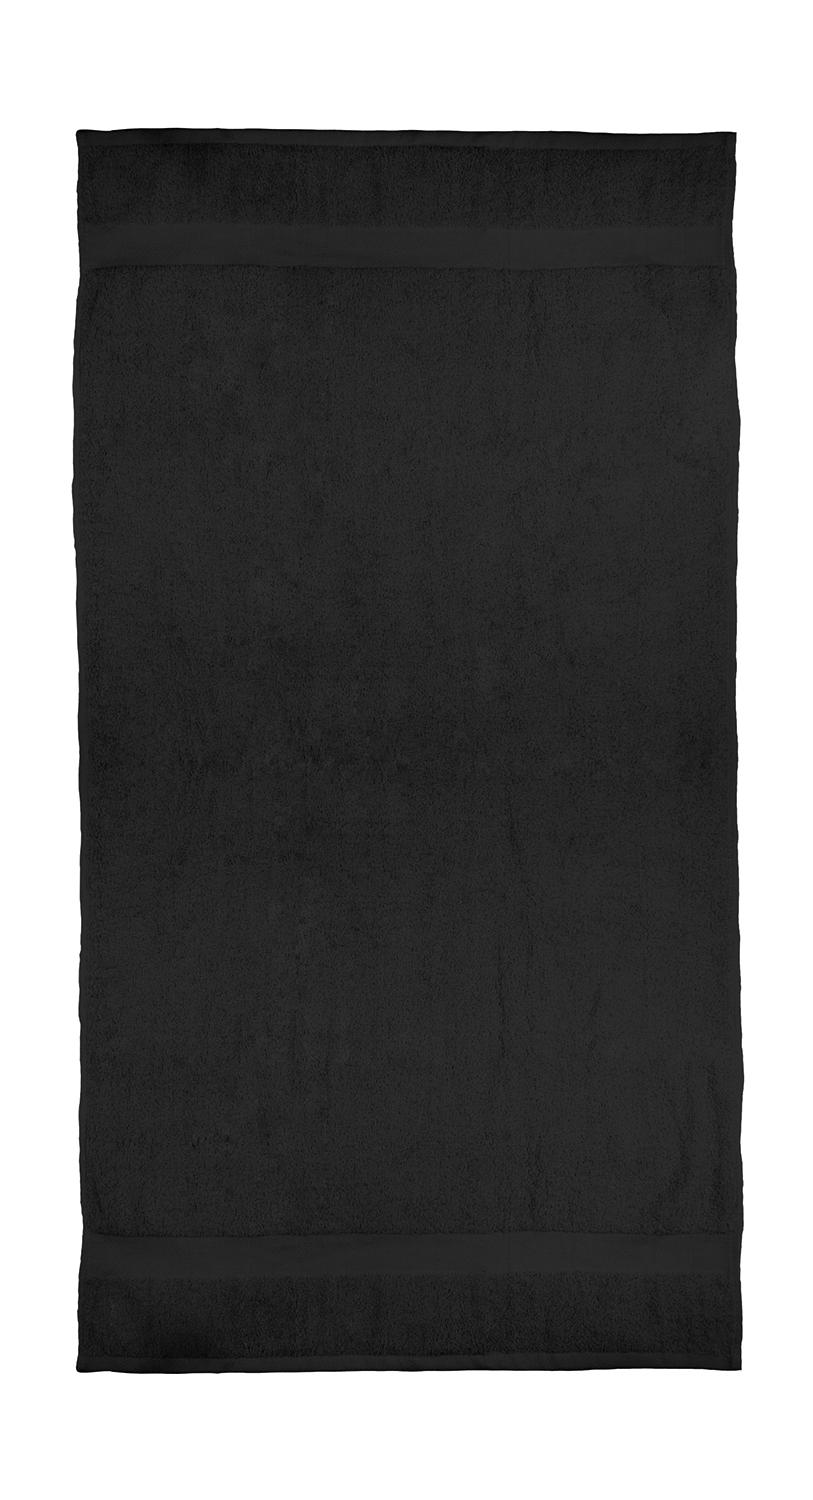  Seine Bath Towel 70x140cm in Farbe Black